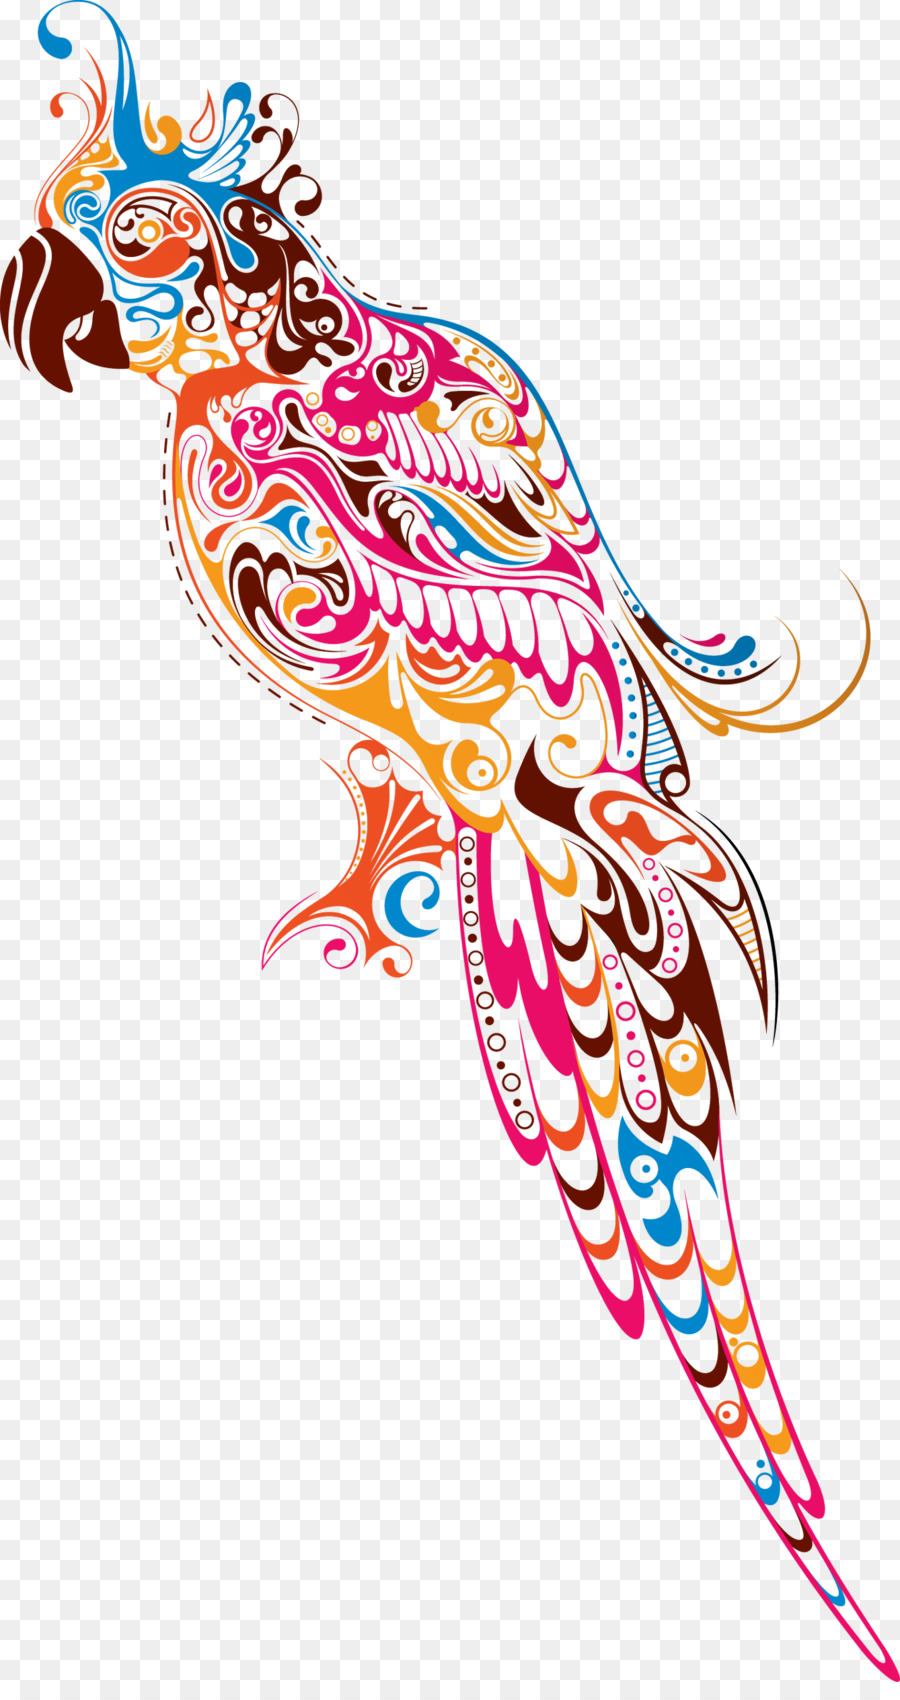 Budgerigar Lovebird Silhouette Clip art - Bird png download - 1338*2500 - Free Transparent Budgerigar png Download.